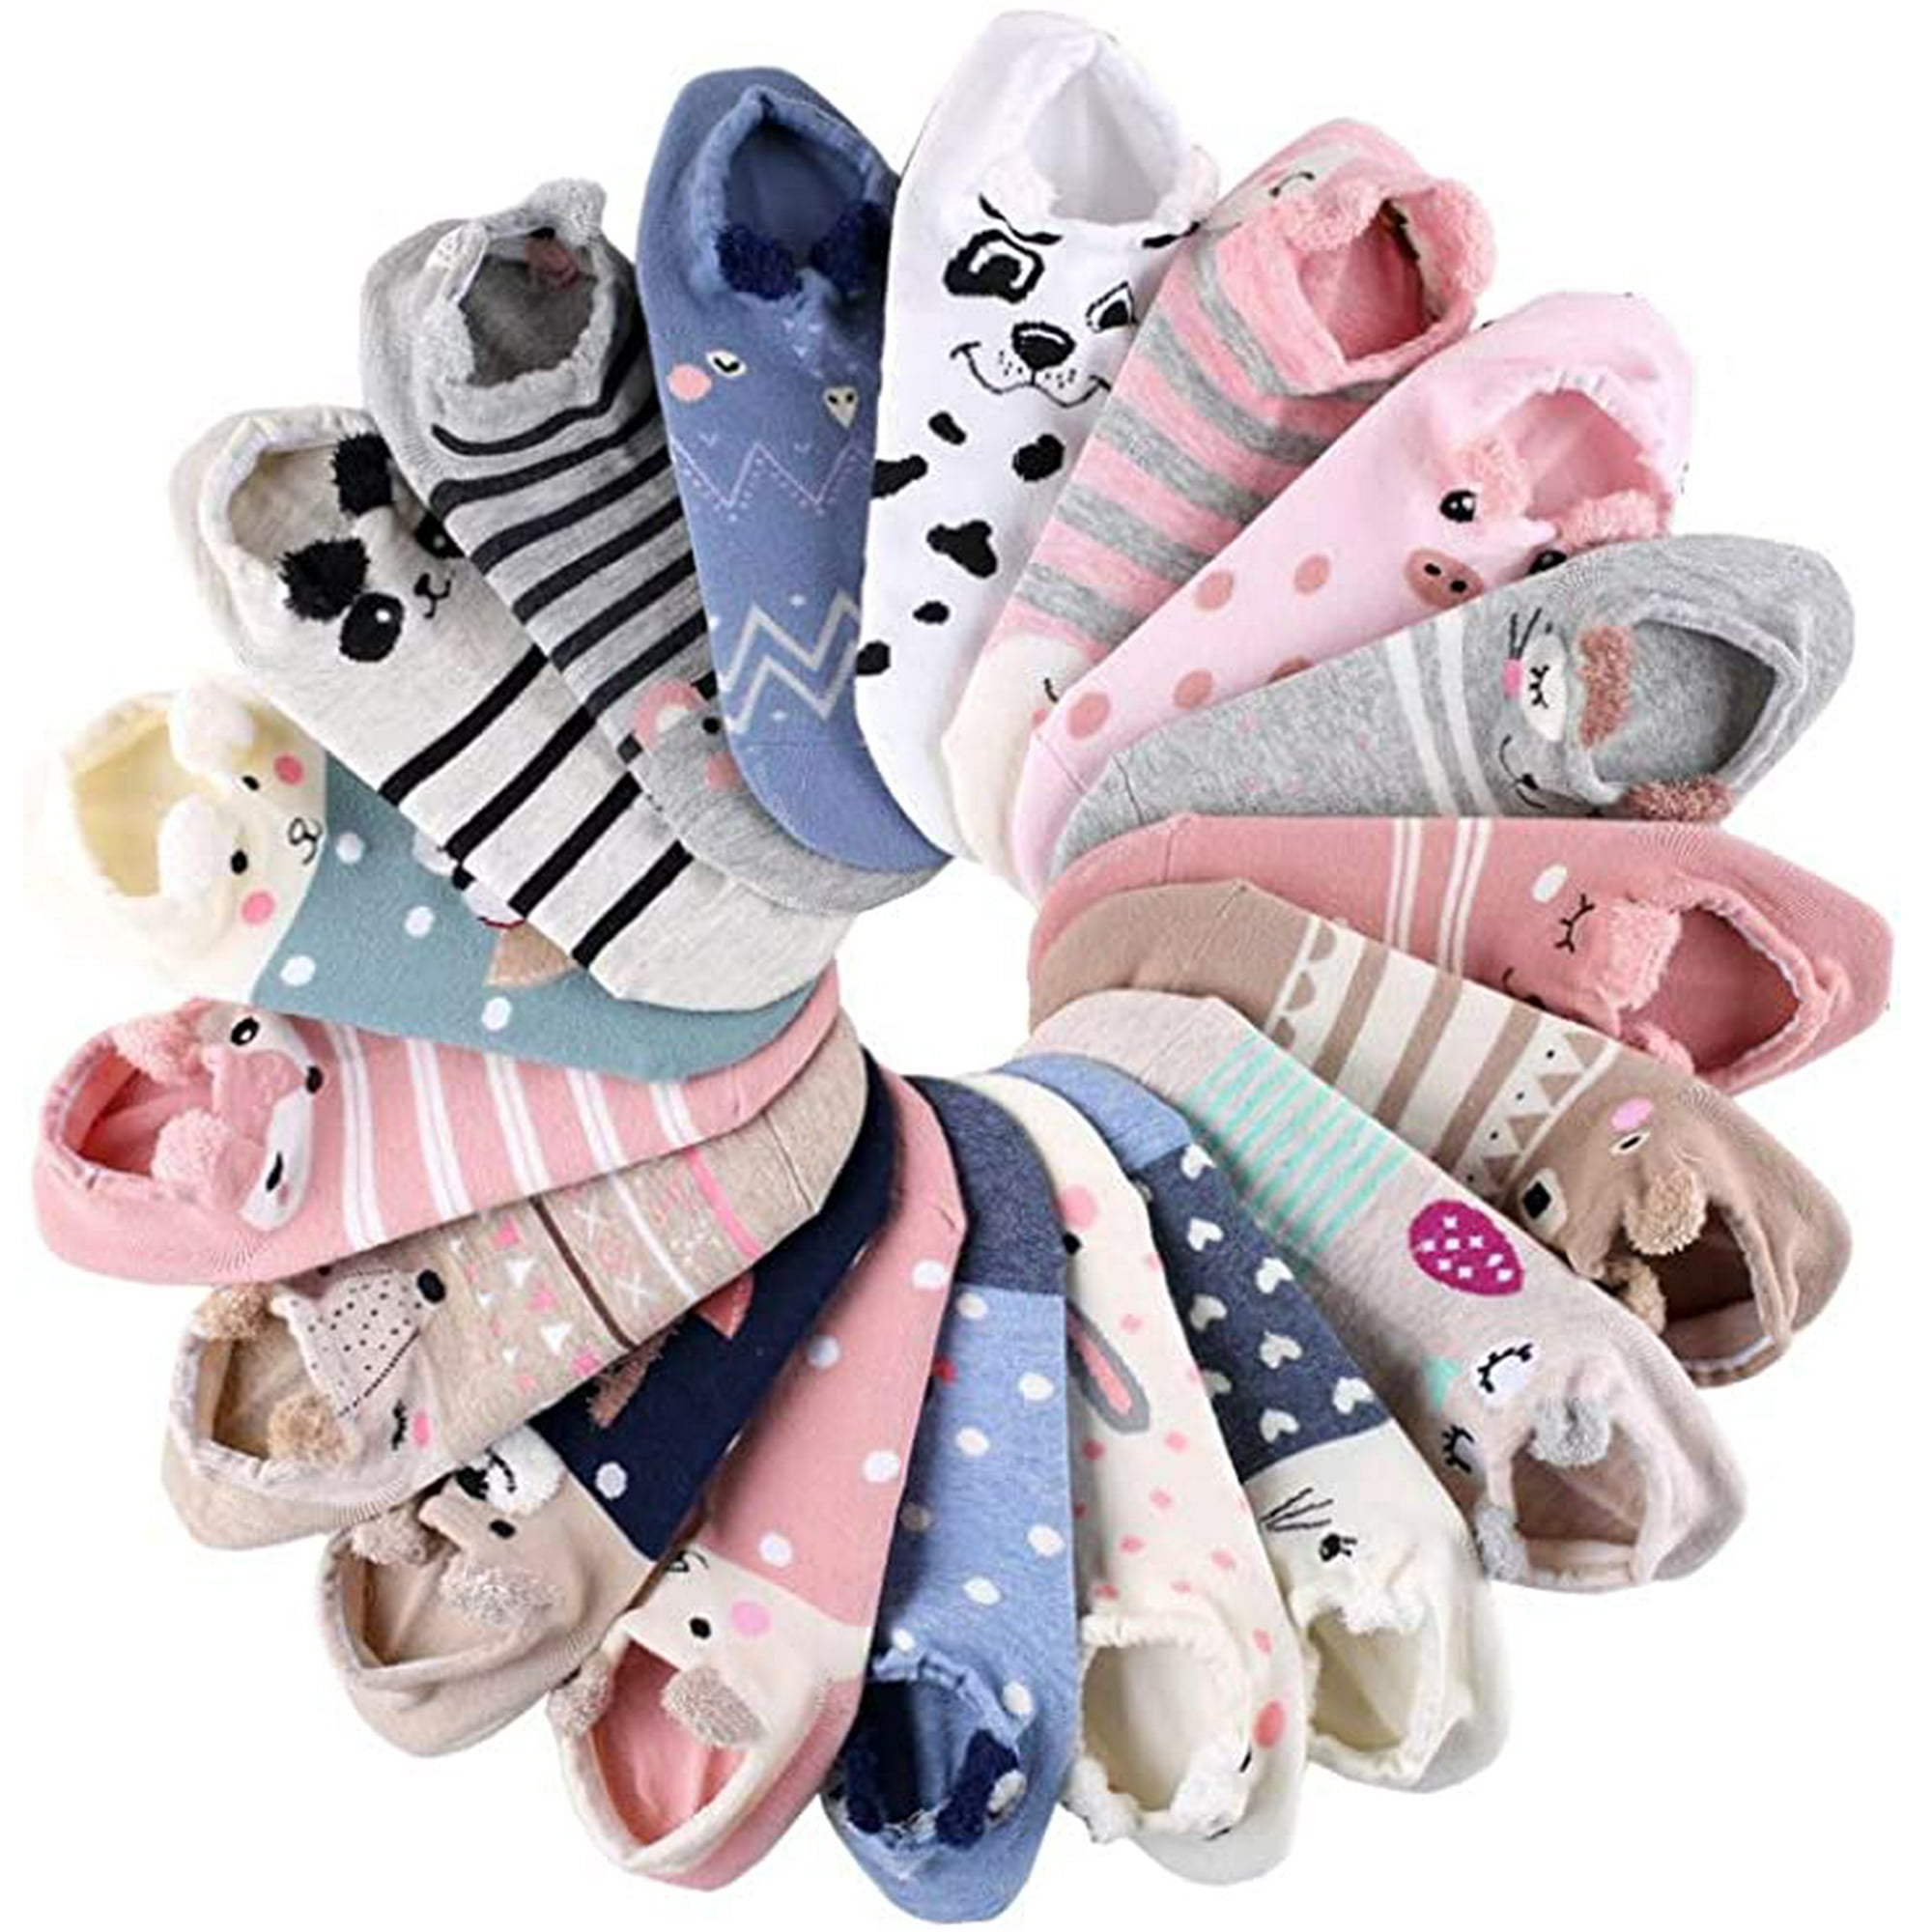 12 Pares de calcetines para niñas »